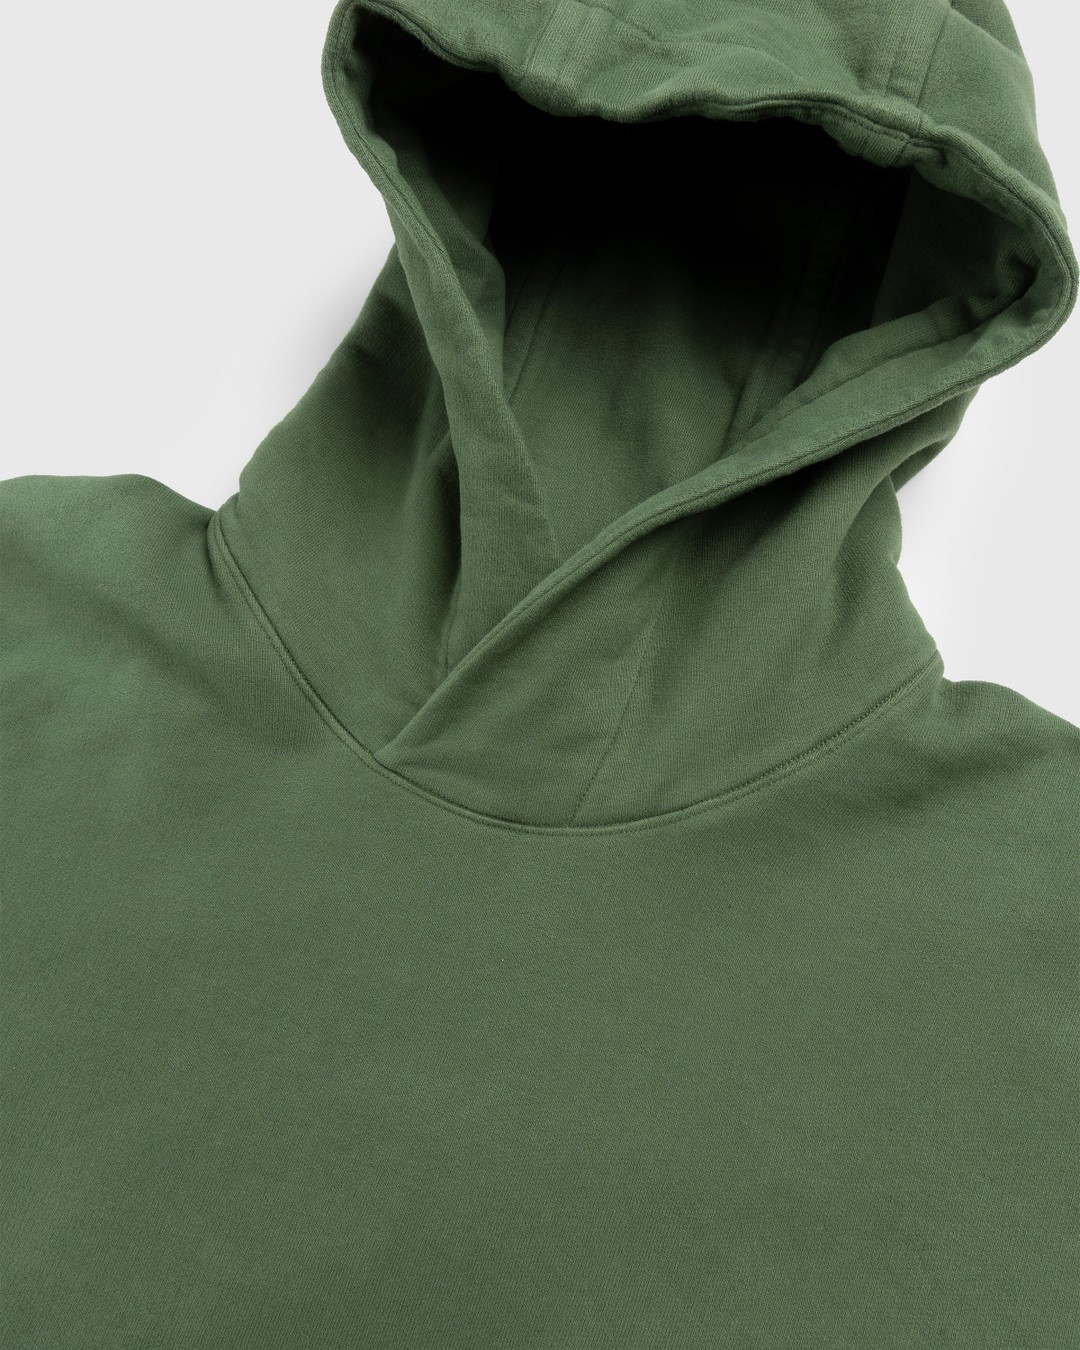 Stone Island – Garment-Dyed Fleece Hoodie Olive - Sweats - Green - Image 3